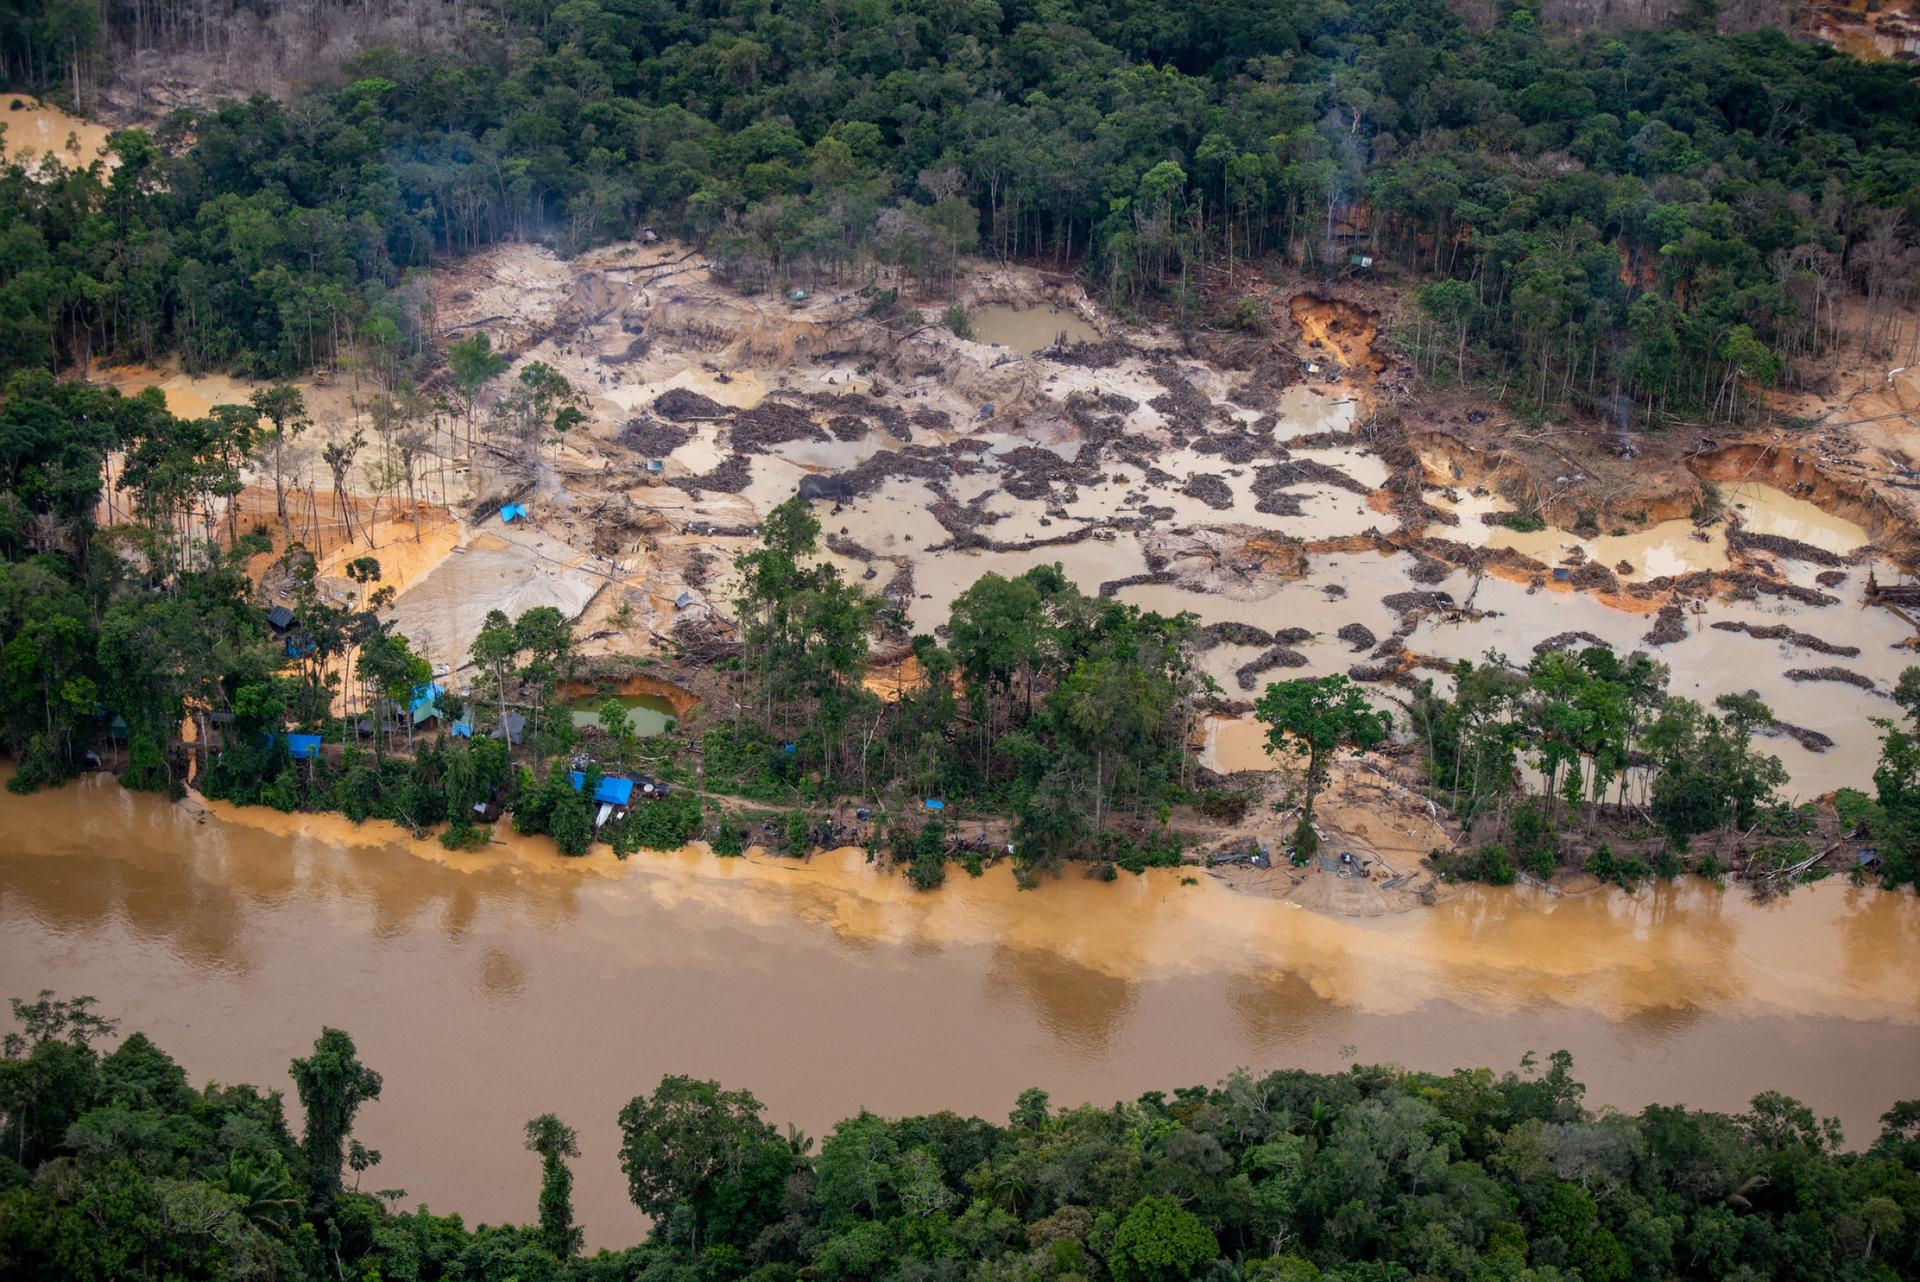  Wildcat mining along the Uraricoera River, in Yanomami Territory.